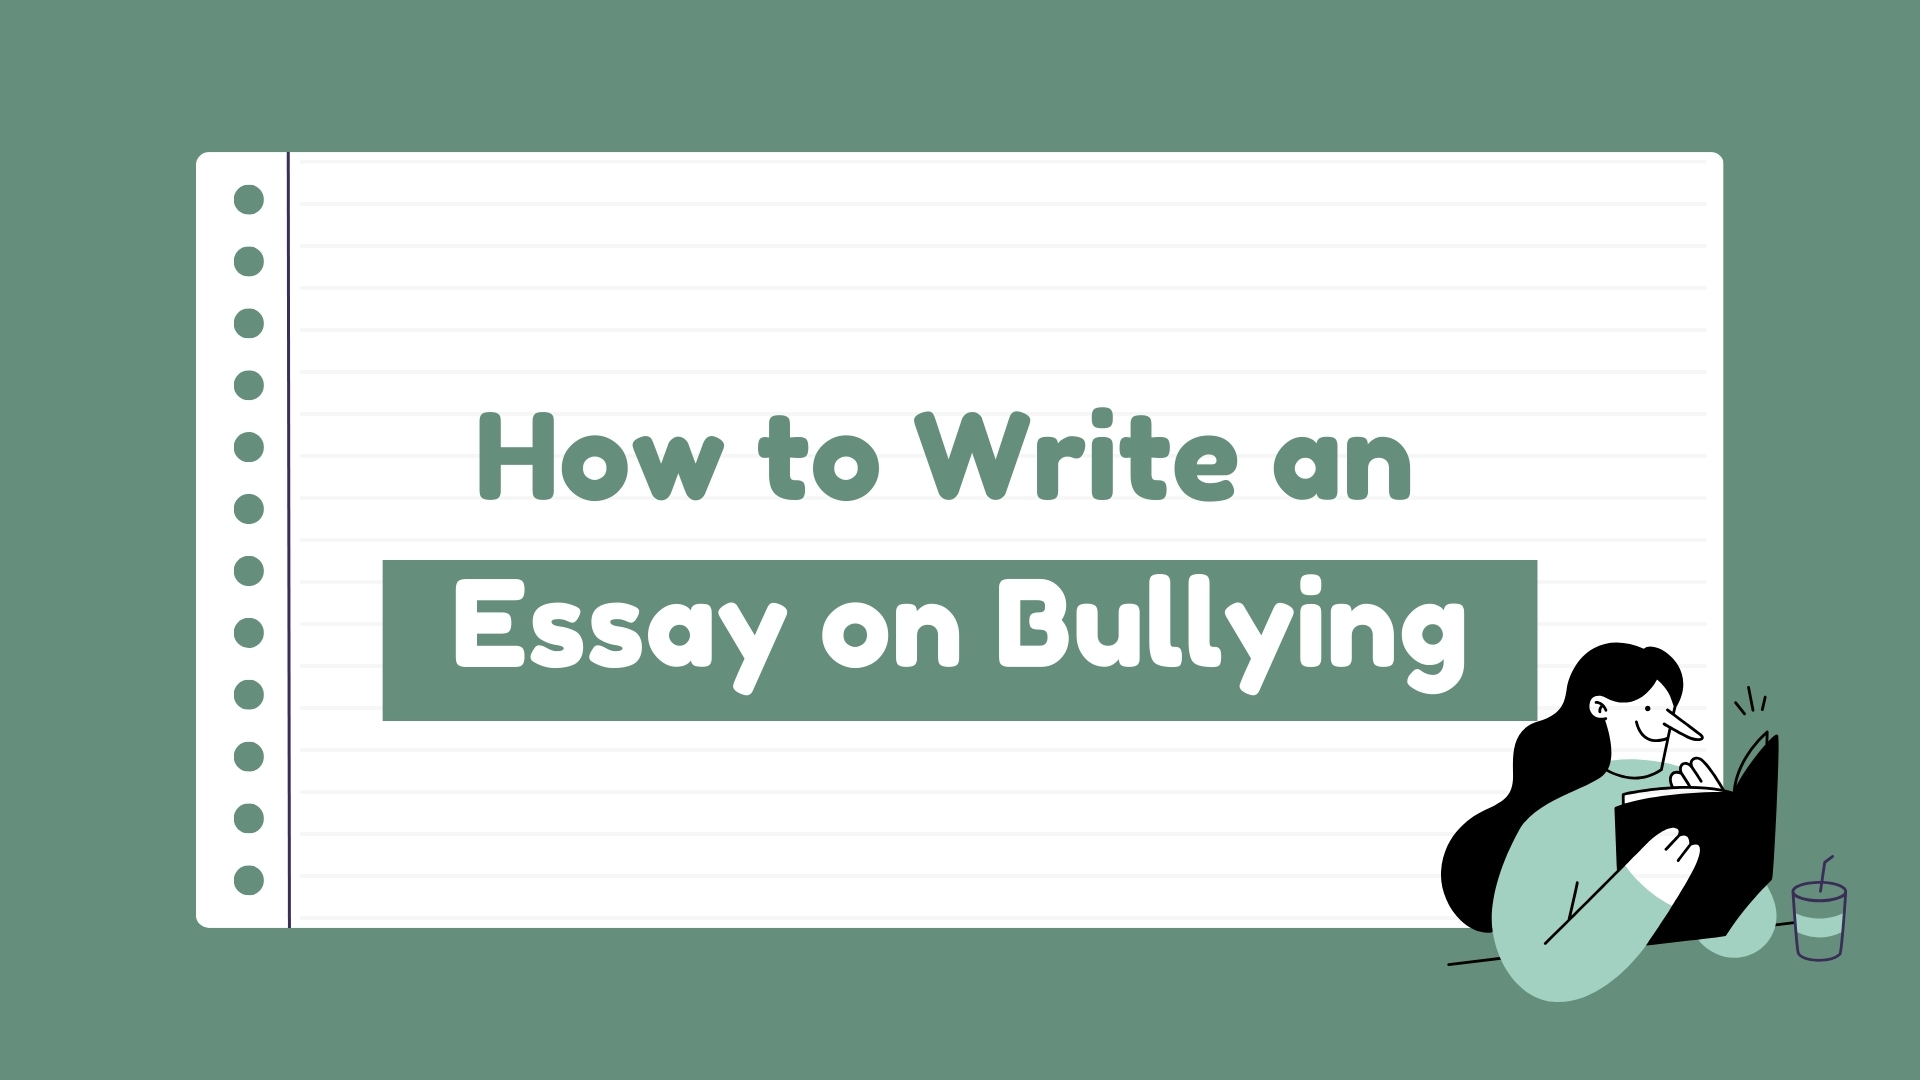 How Write bullying essay